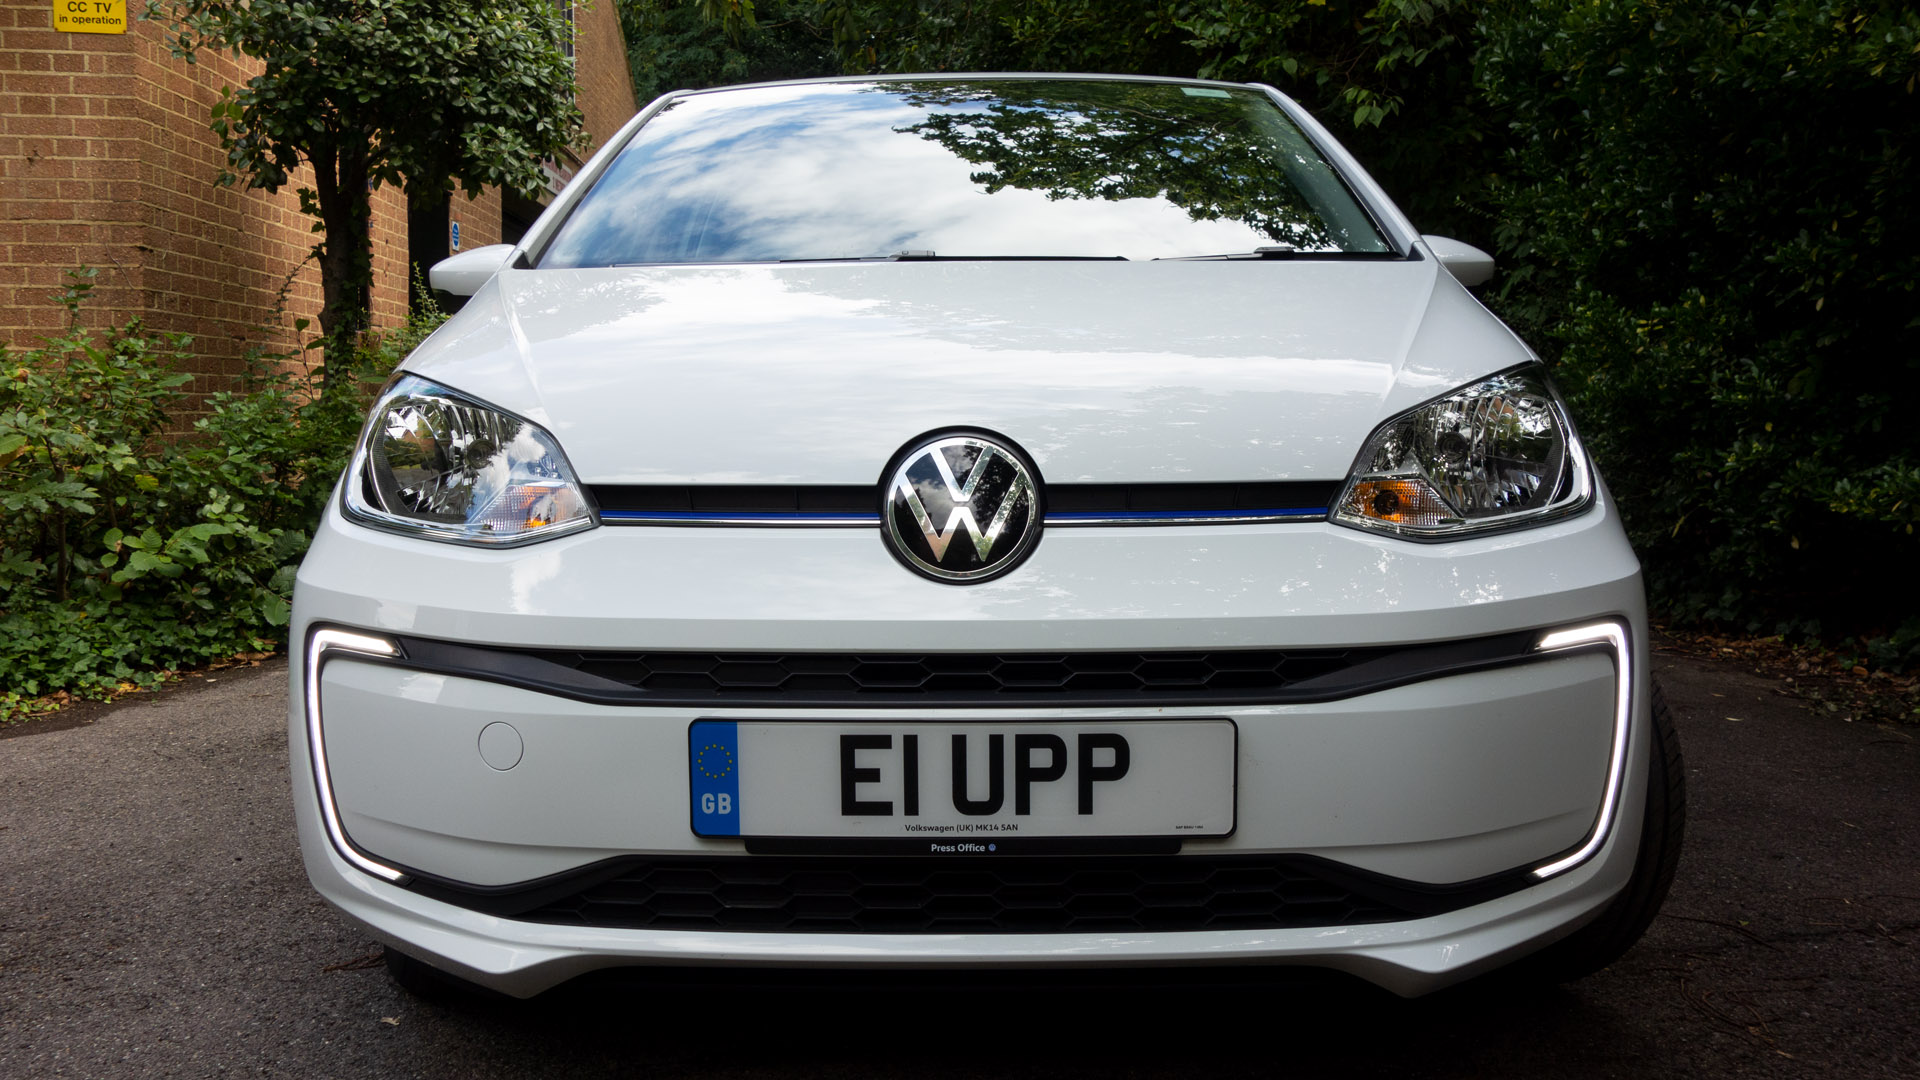 Volkswagen e-up! front design